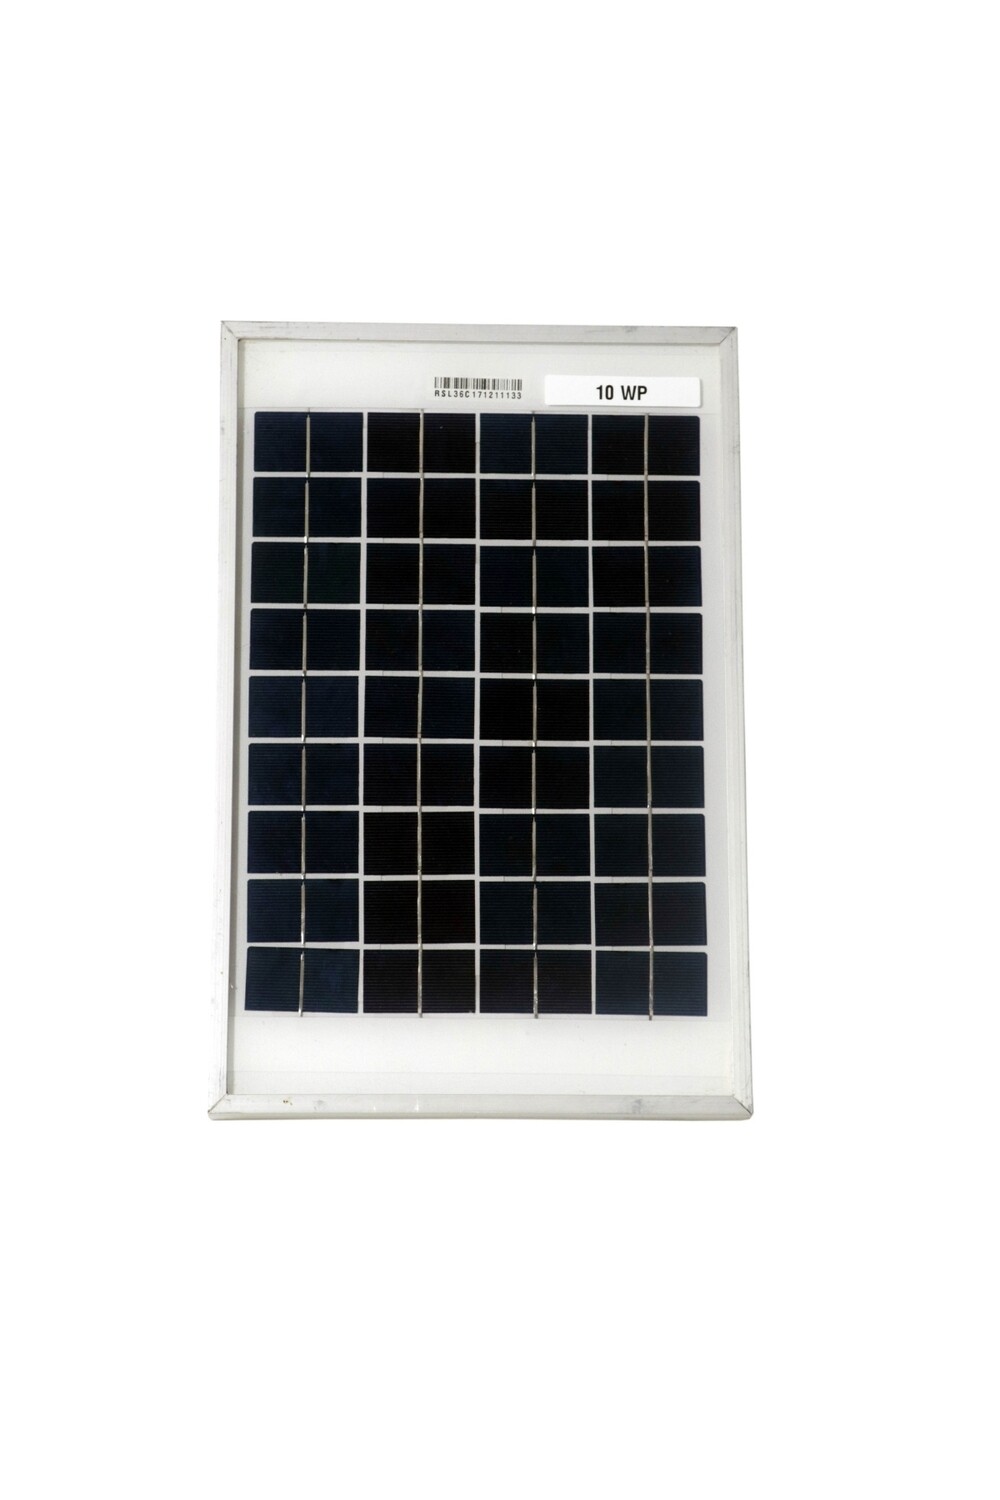 10 Watt Lowest Cost Starting Level Solar Panel India